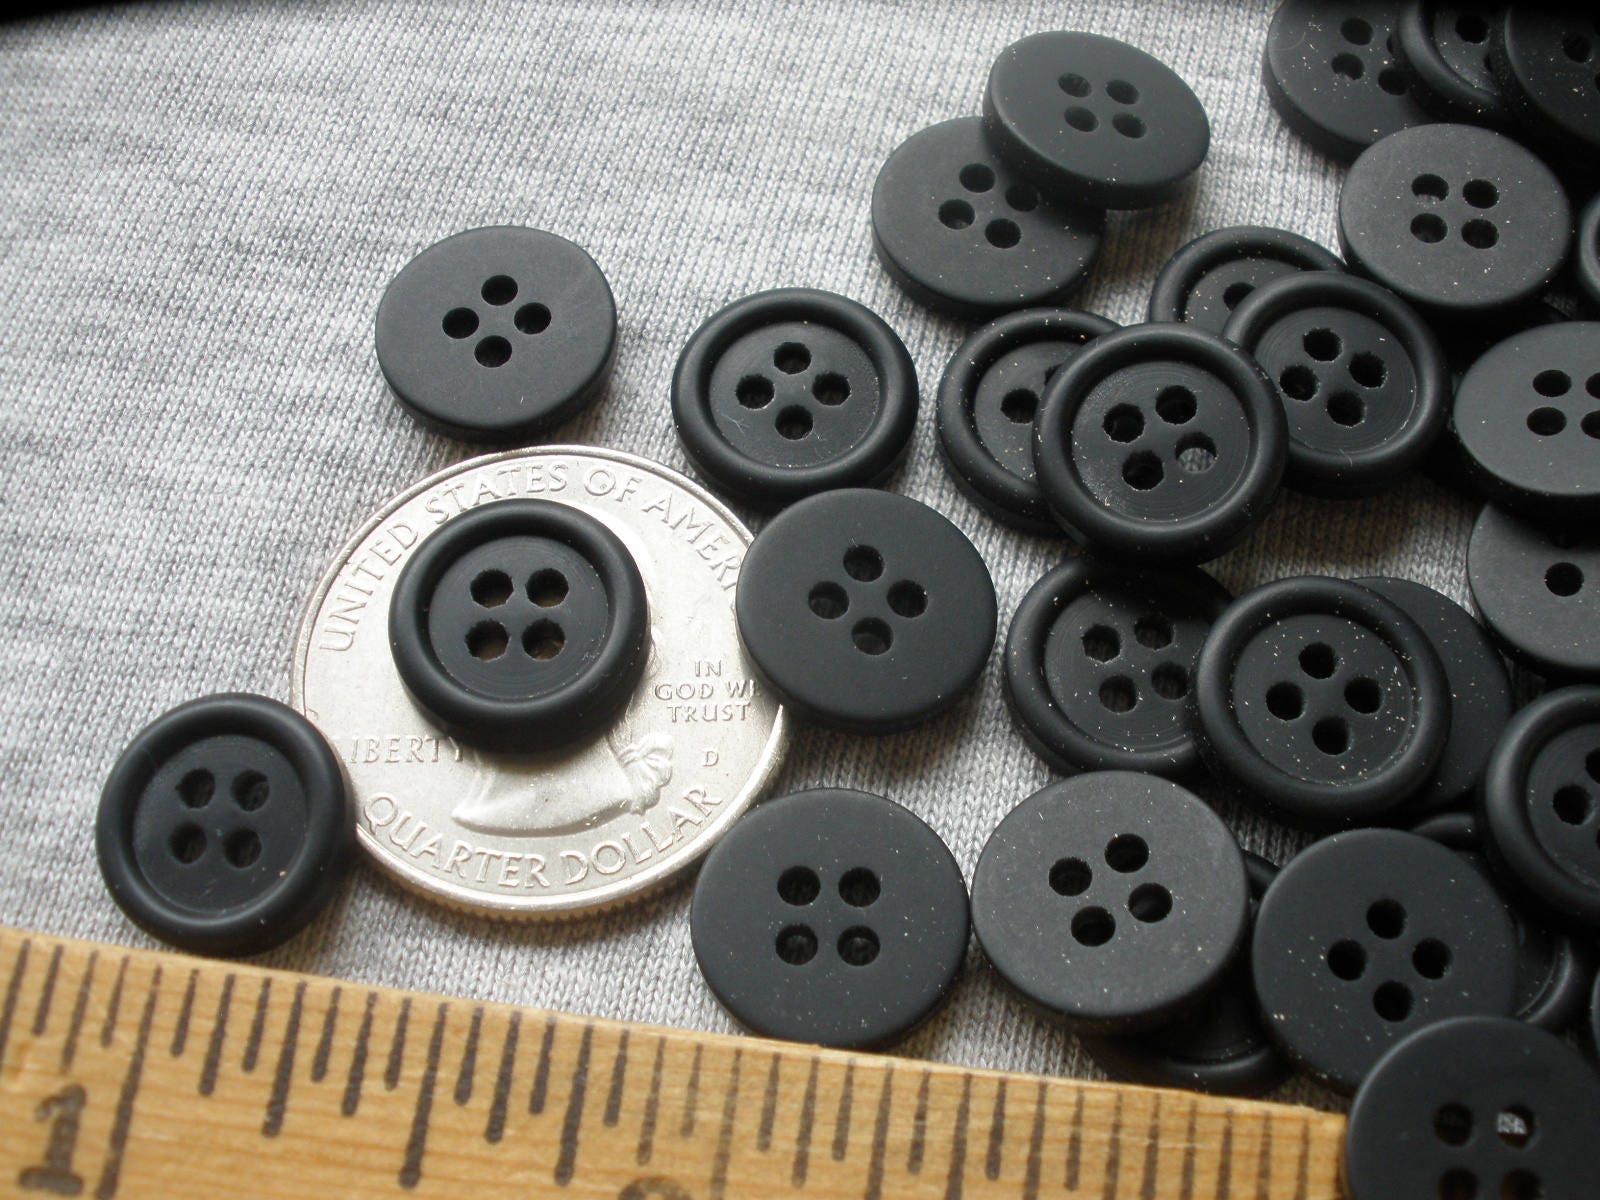 bofaaa Women's Shirt Rib-Knit Fake Buttons Dress (Color : Black, Size :  Petite L)